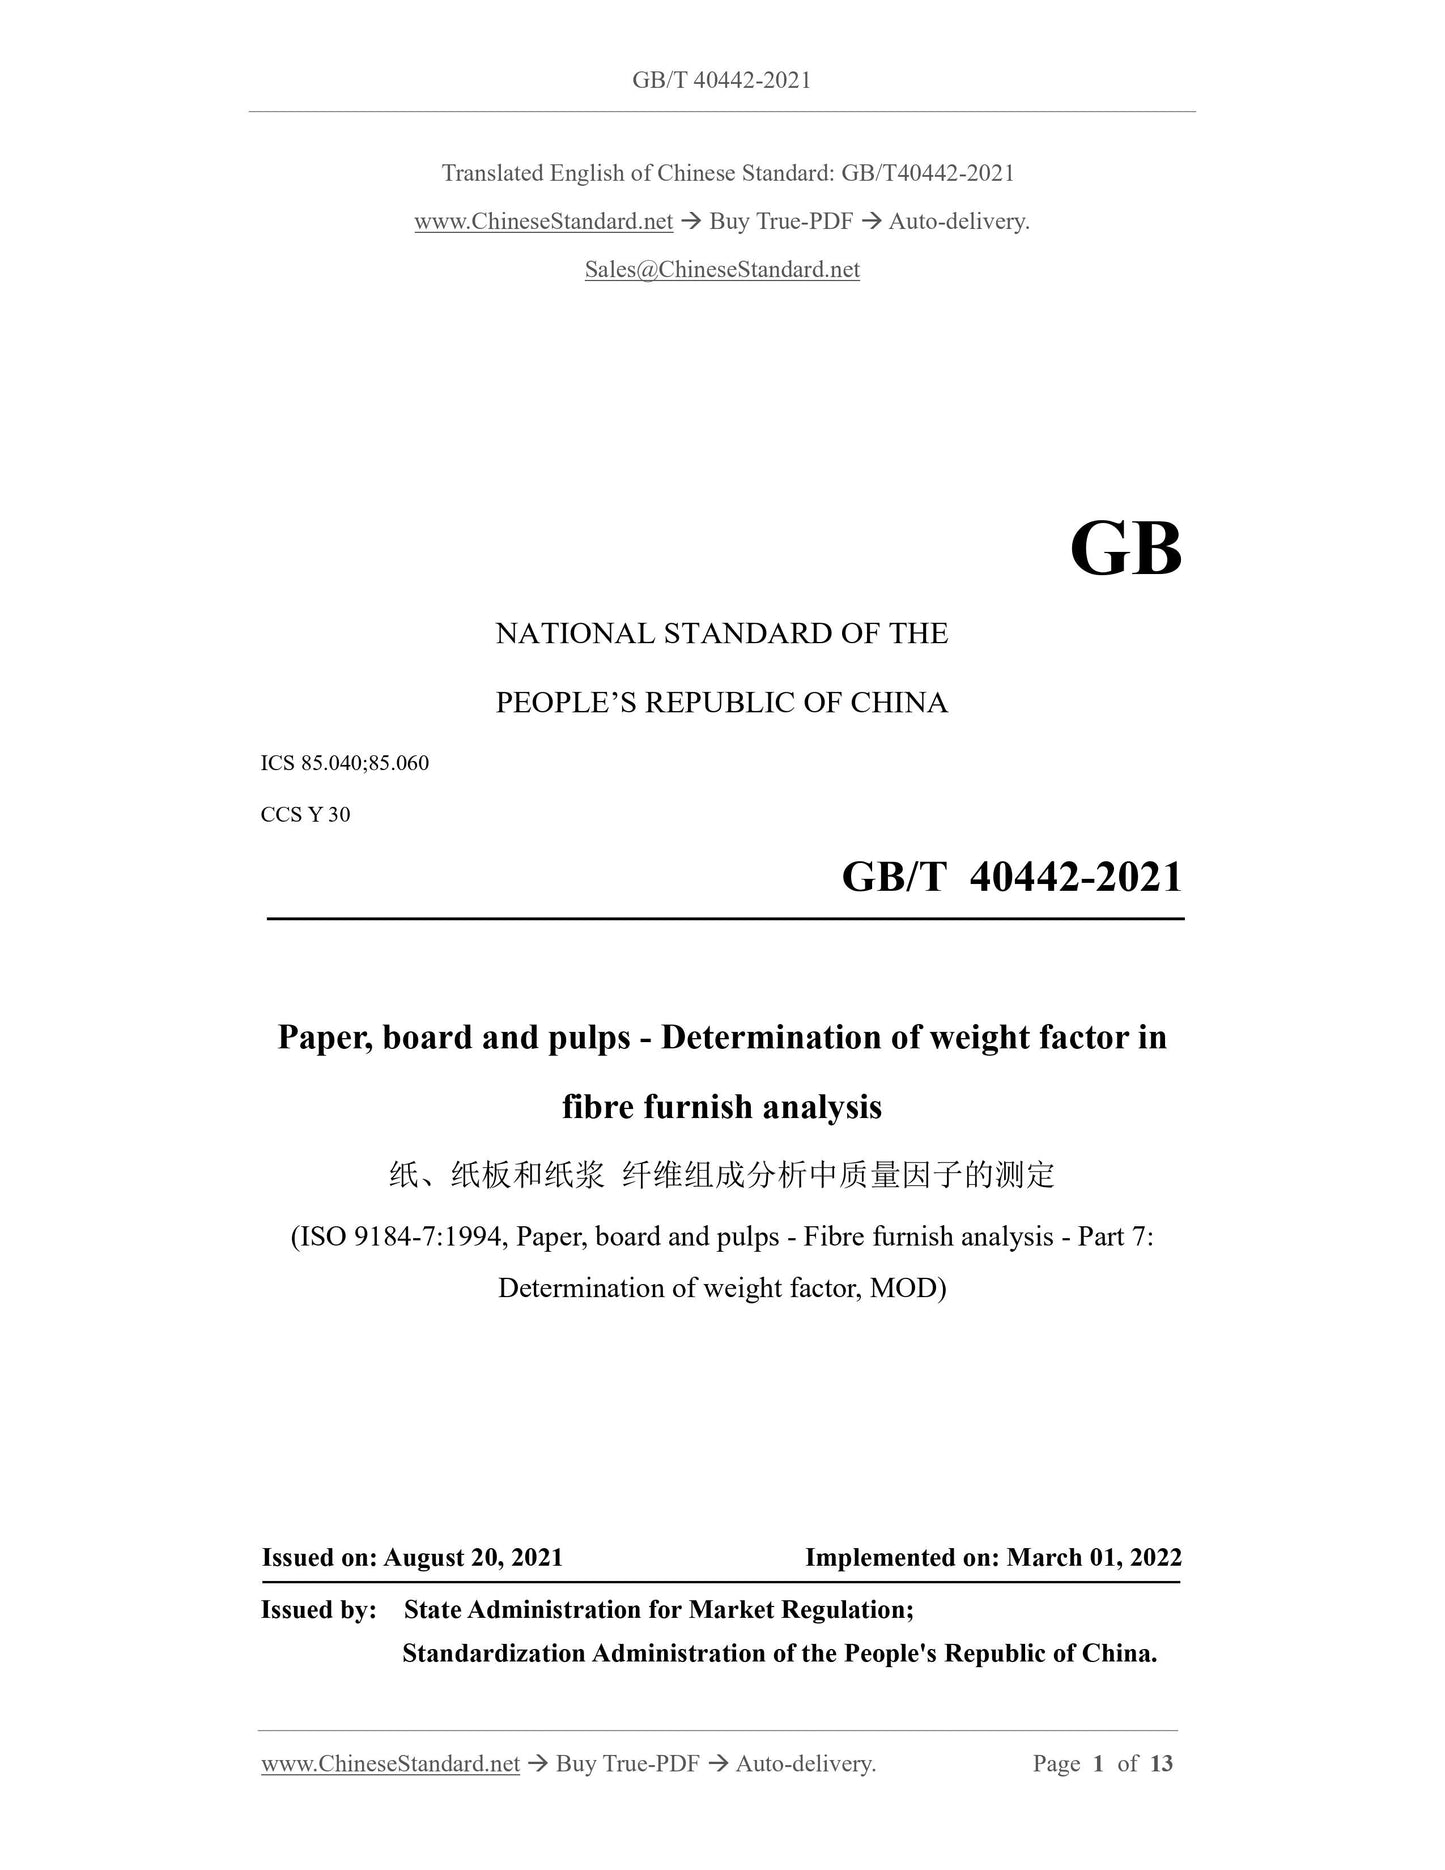 GBT40442-2021 Page 1